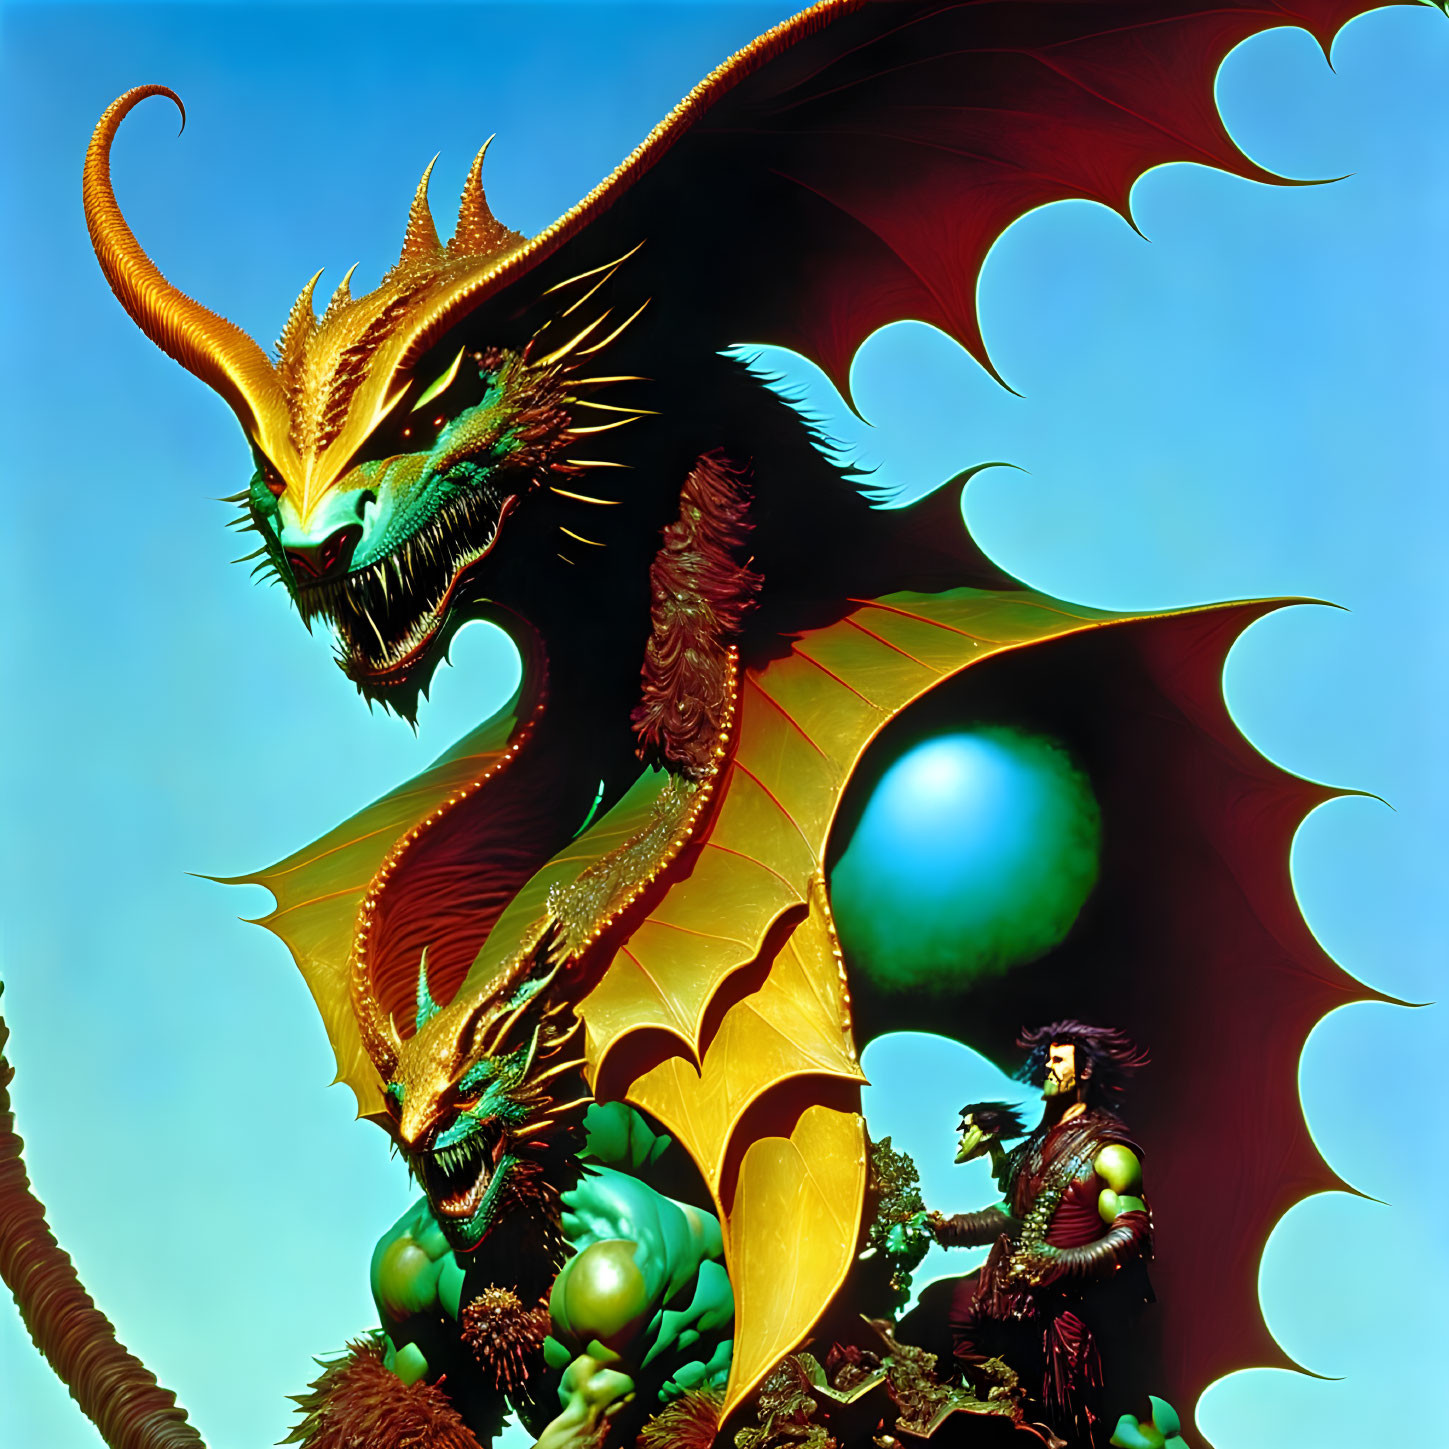 Golden dragon looms over green-armored warrior under blue sky